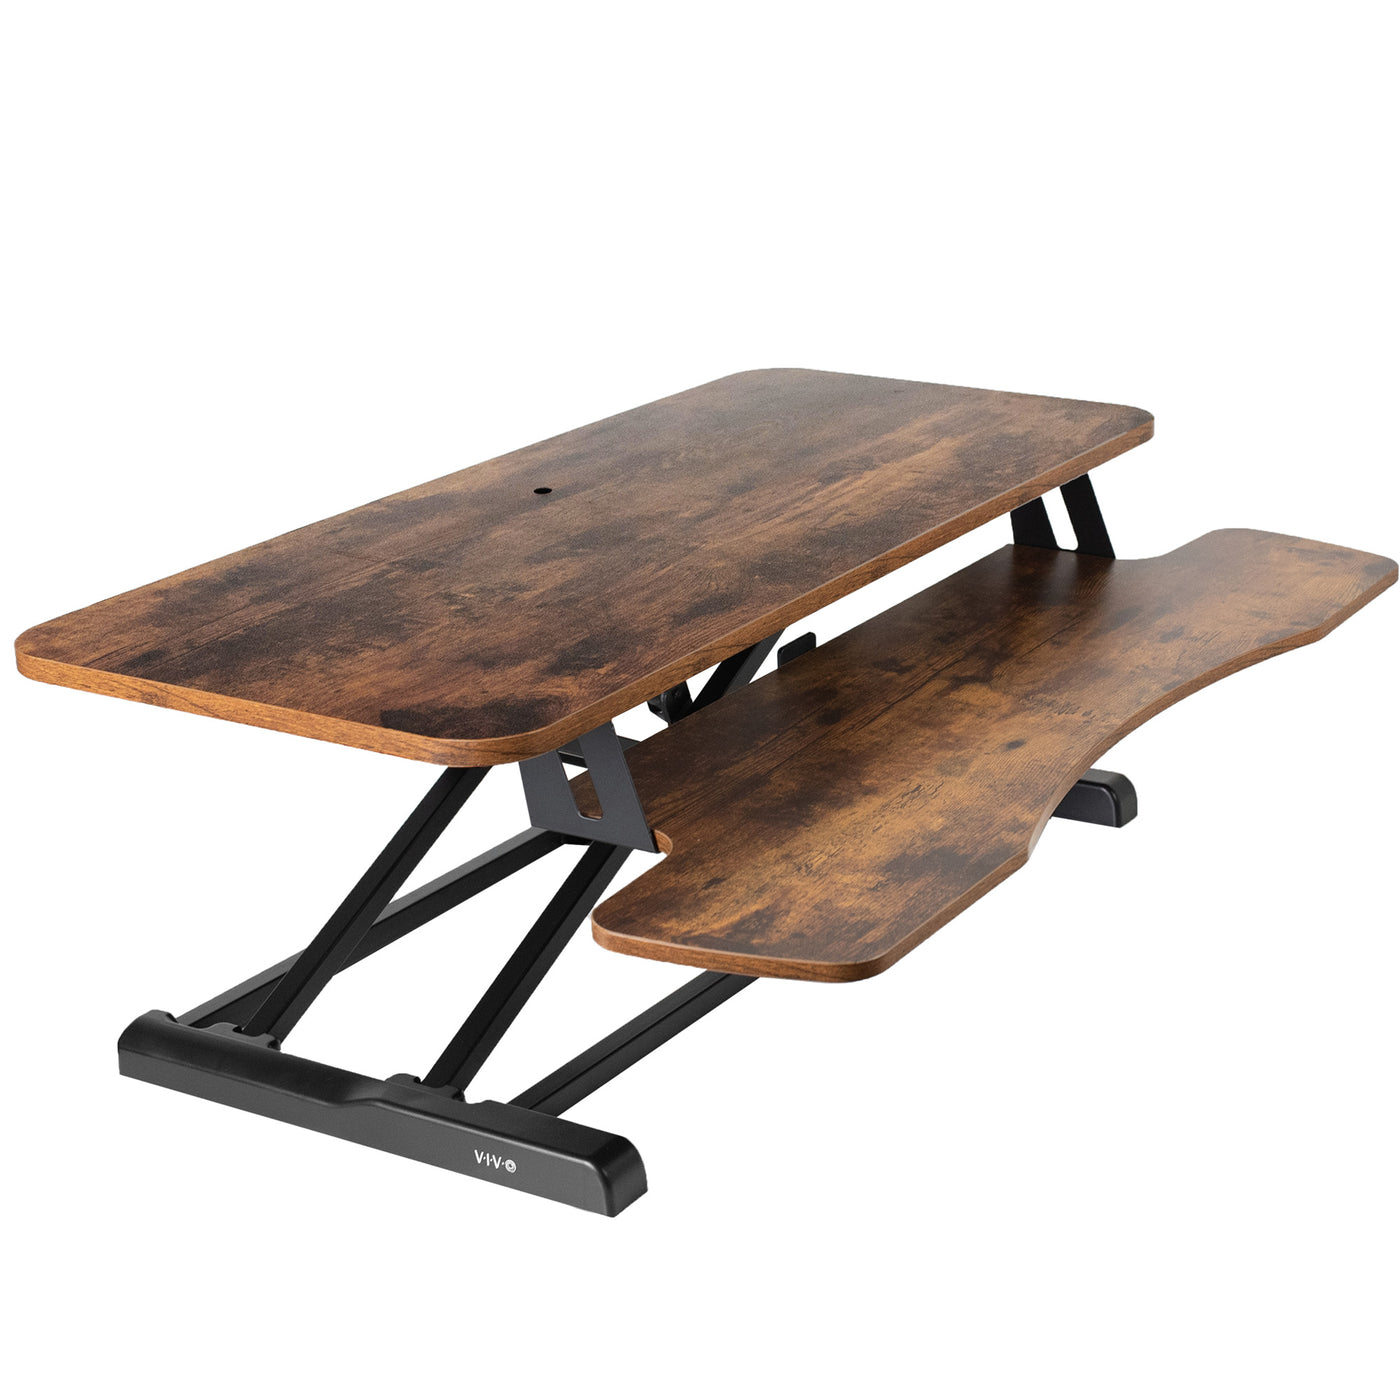 Rustic heavy-duty height adjustable desk converter platform with 2 tiers.